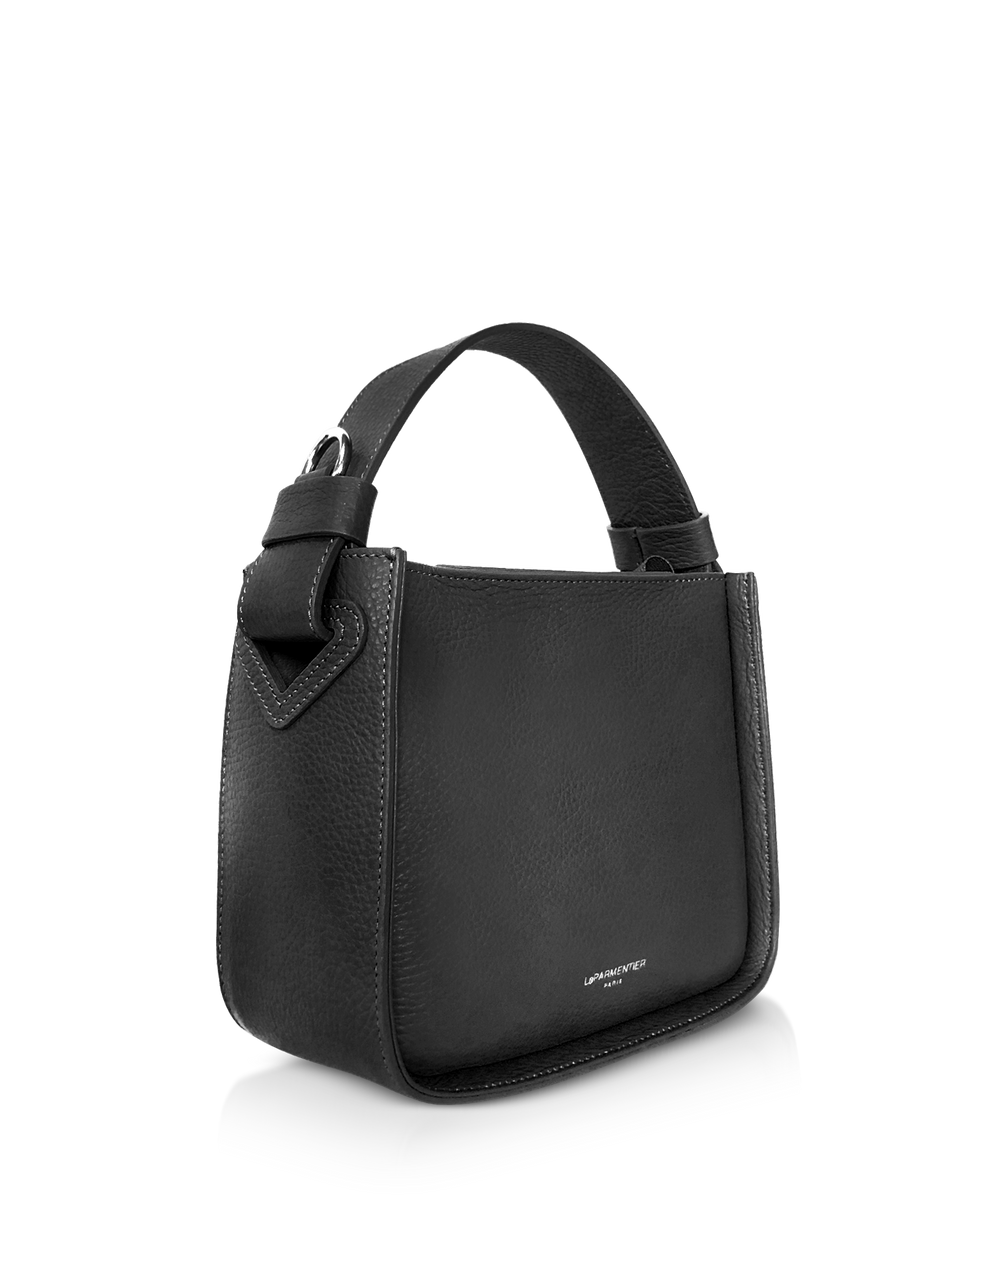 Black leather handbag with wide shoulder strap and silver buckle